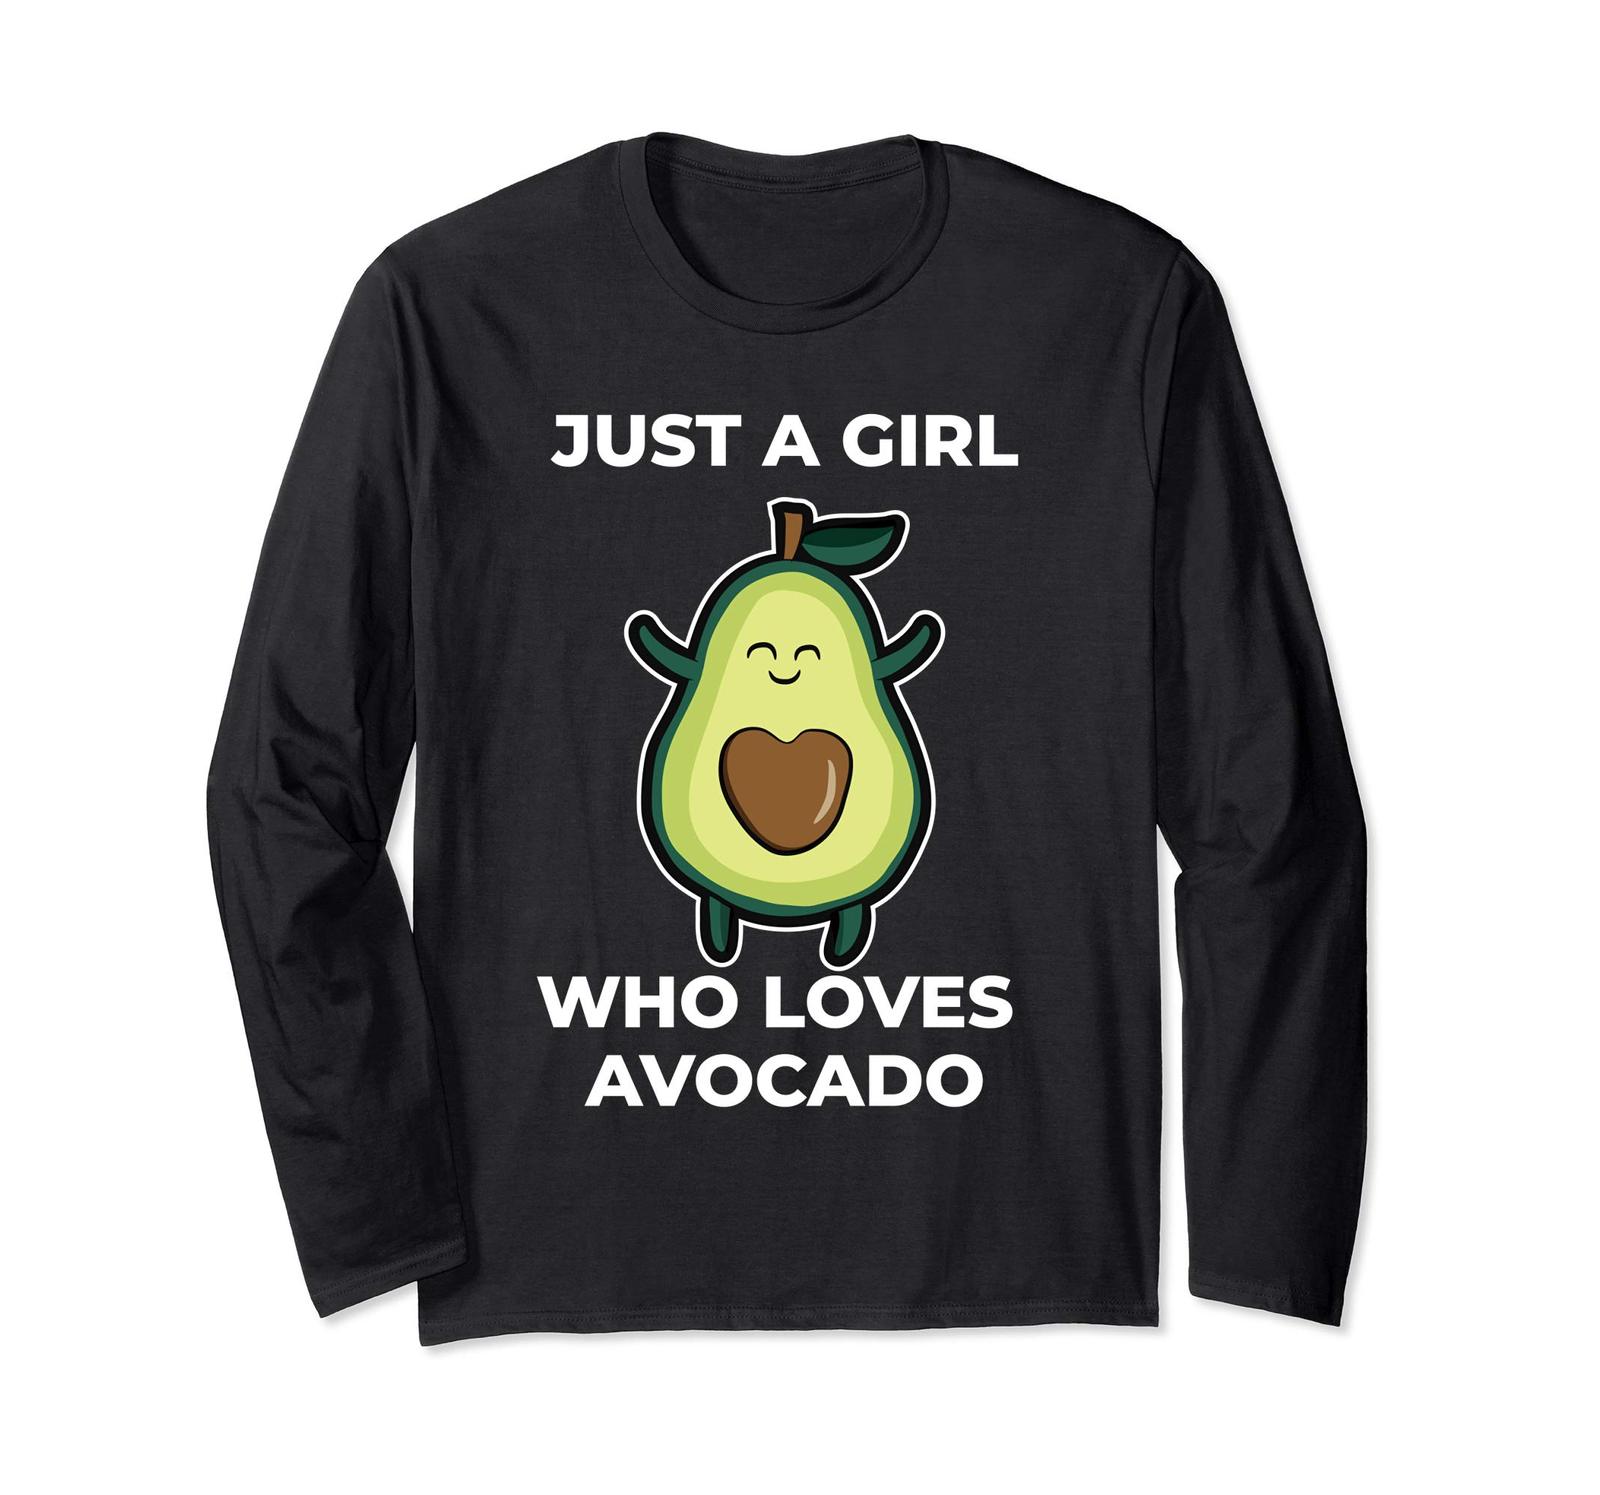 Funny Tee - Funny Just A Girl Who Loves Avocado T-Shirt For Avocado ...